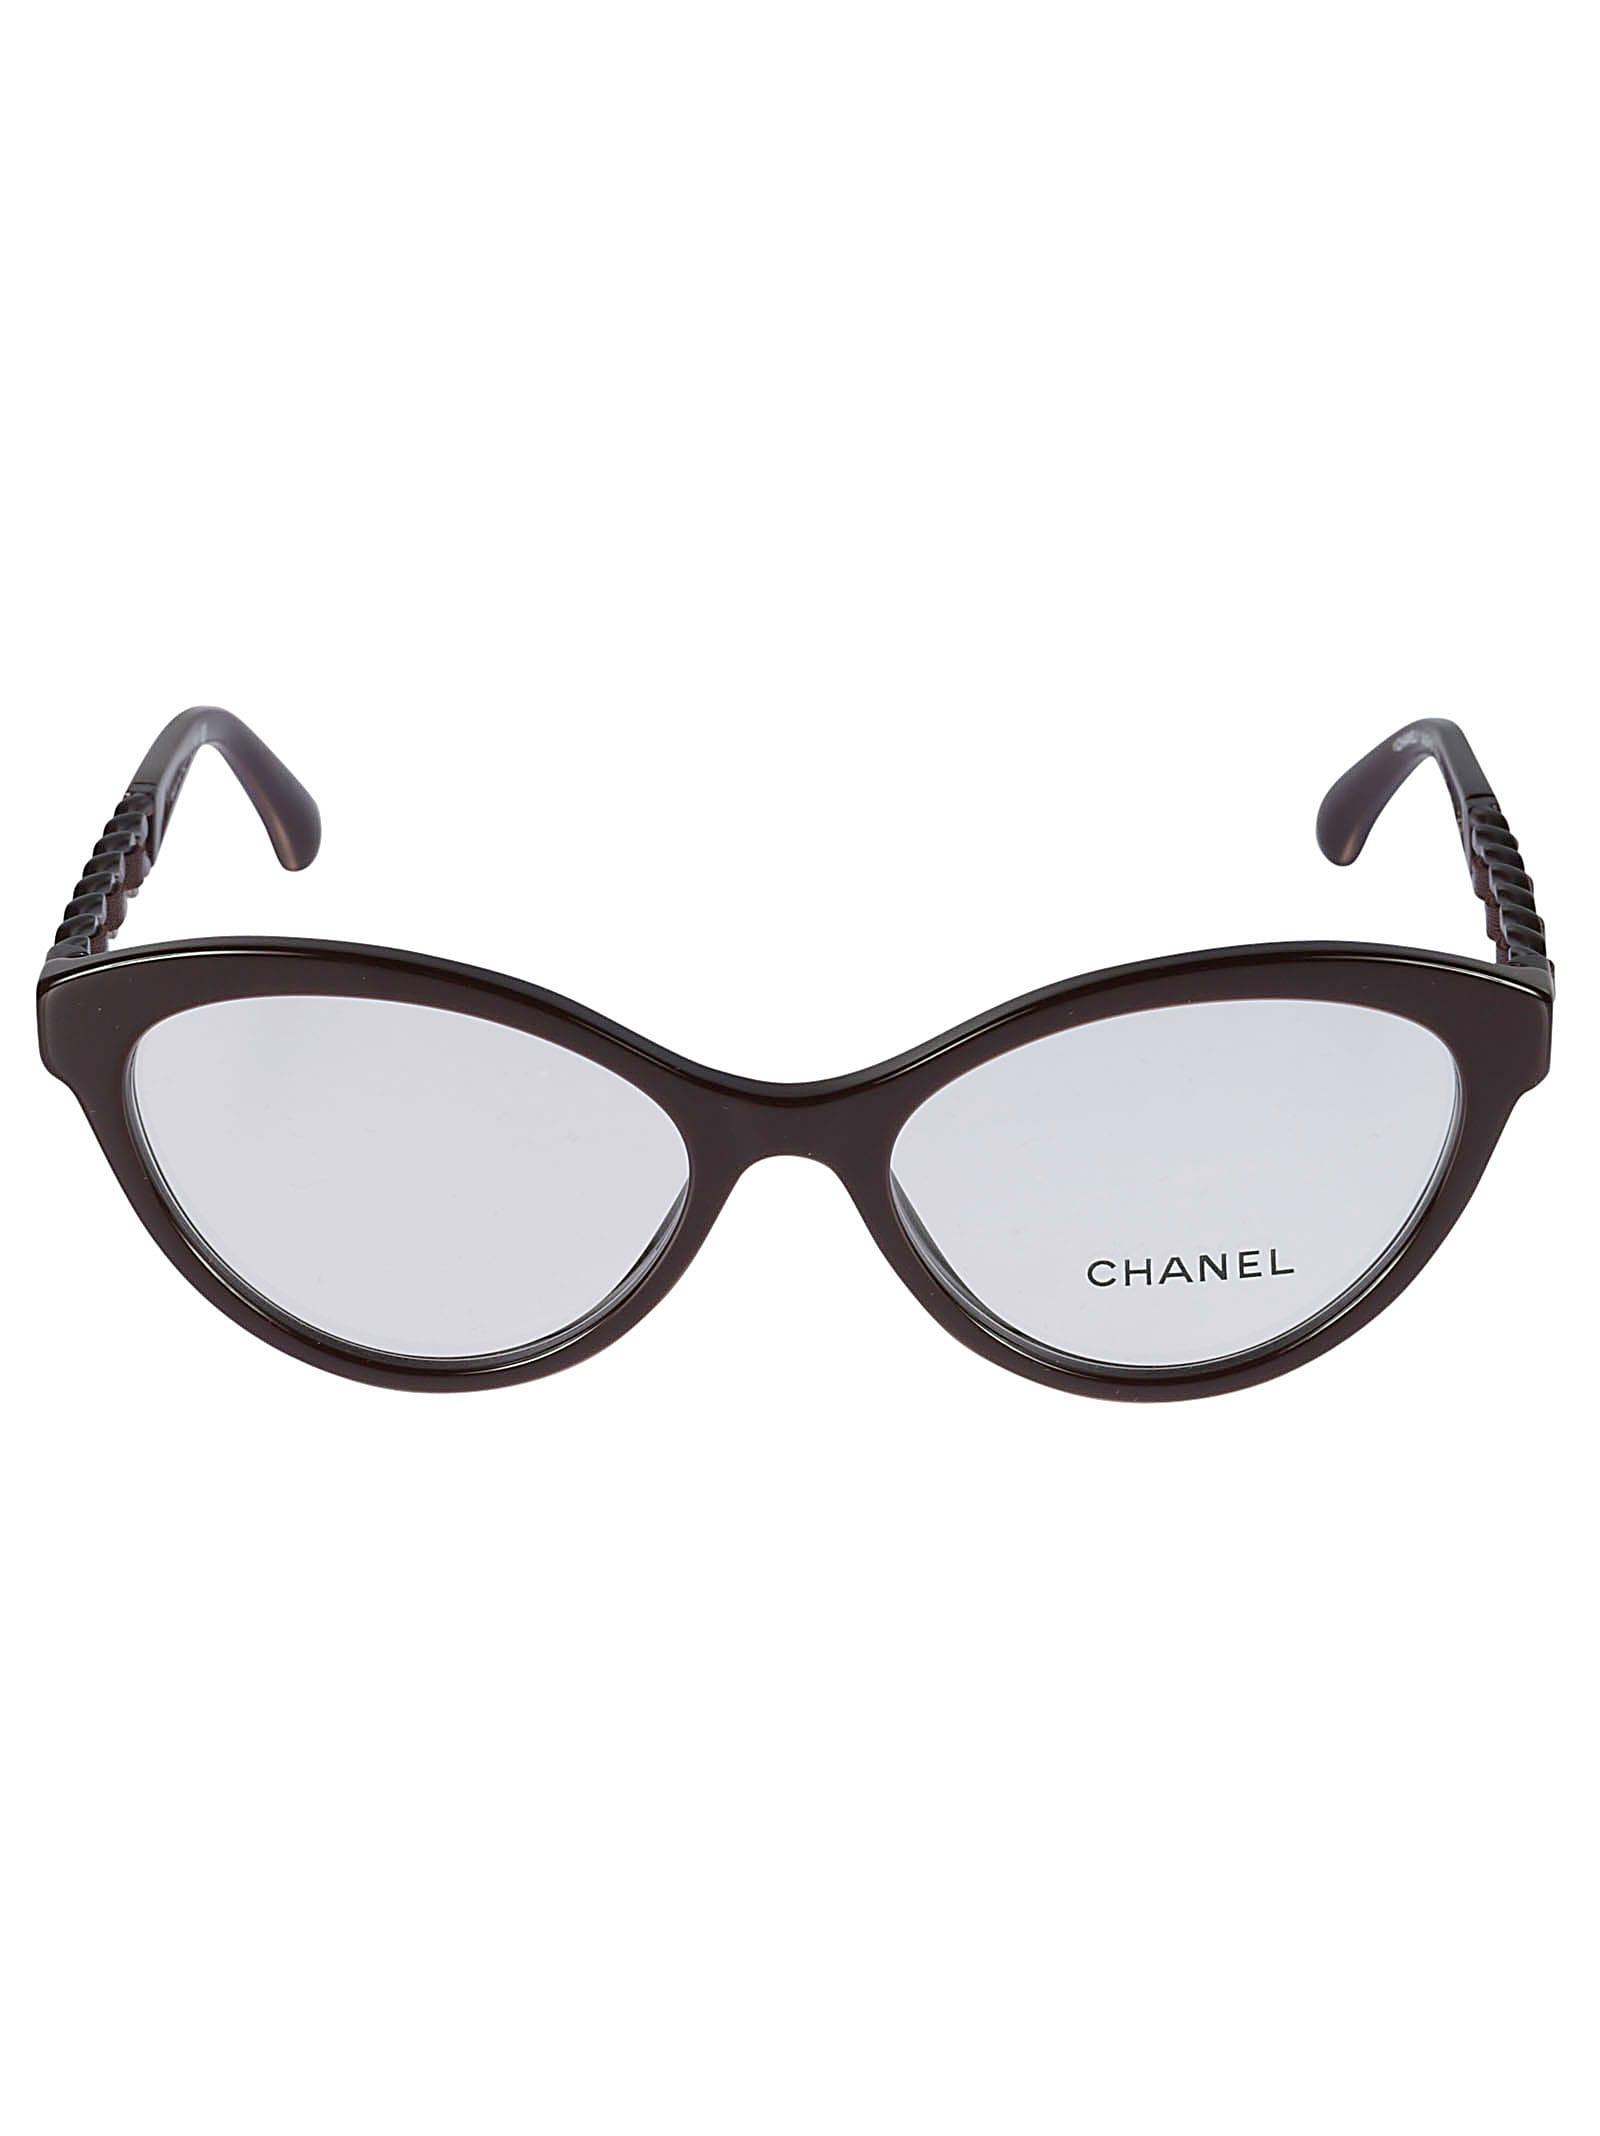 chanel eyeglasses near me